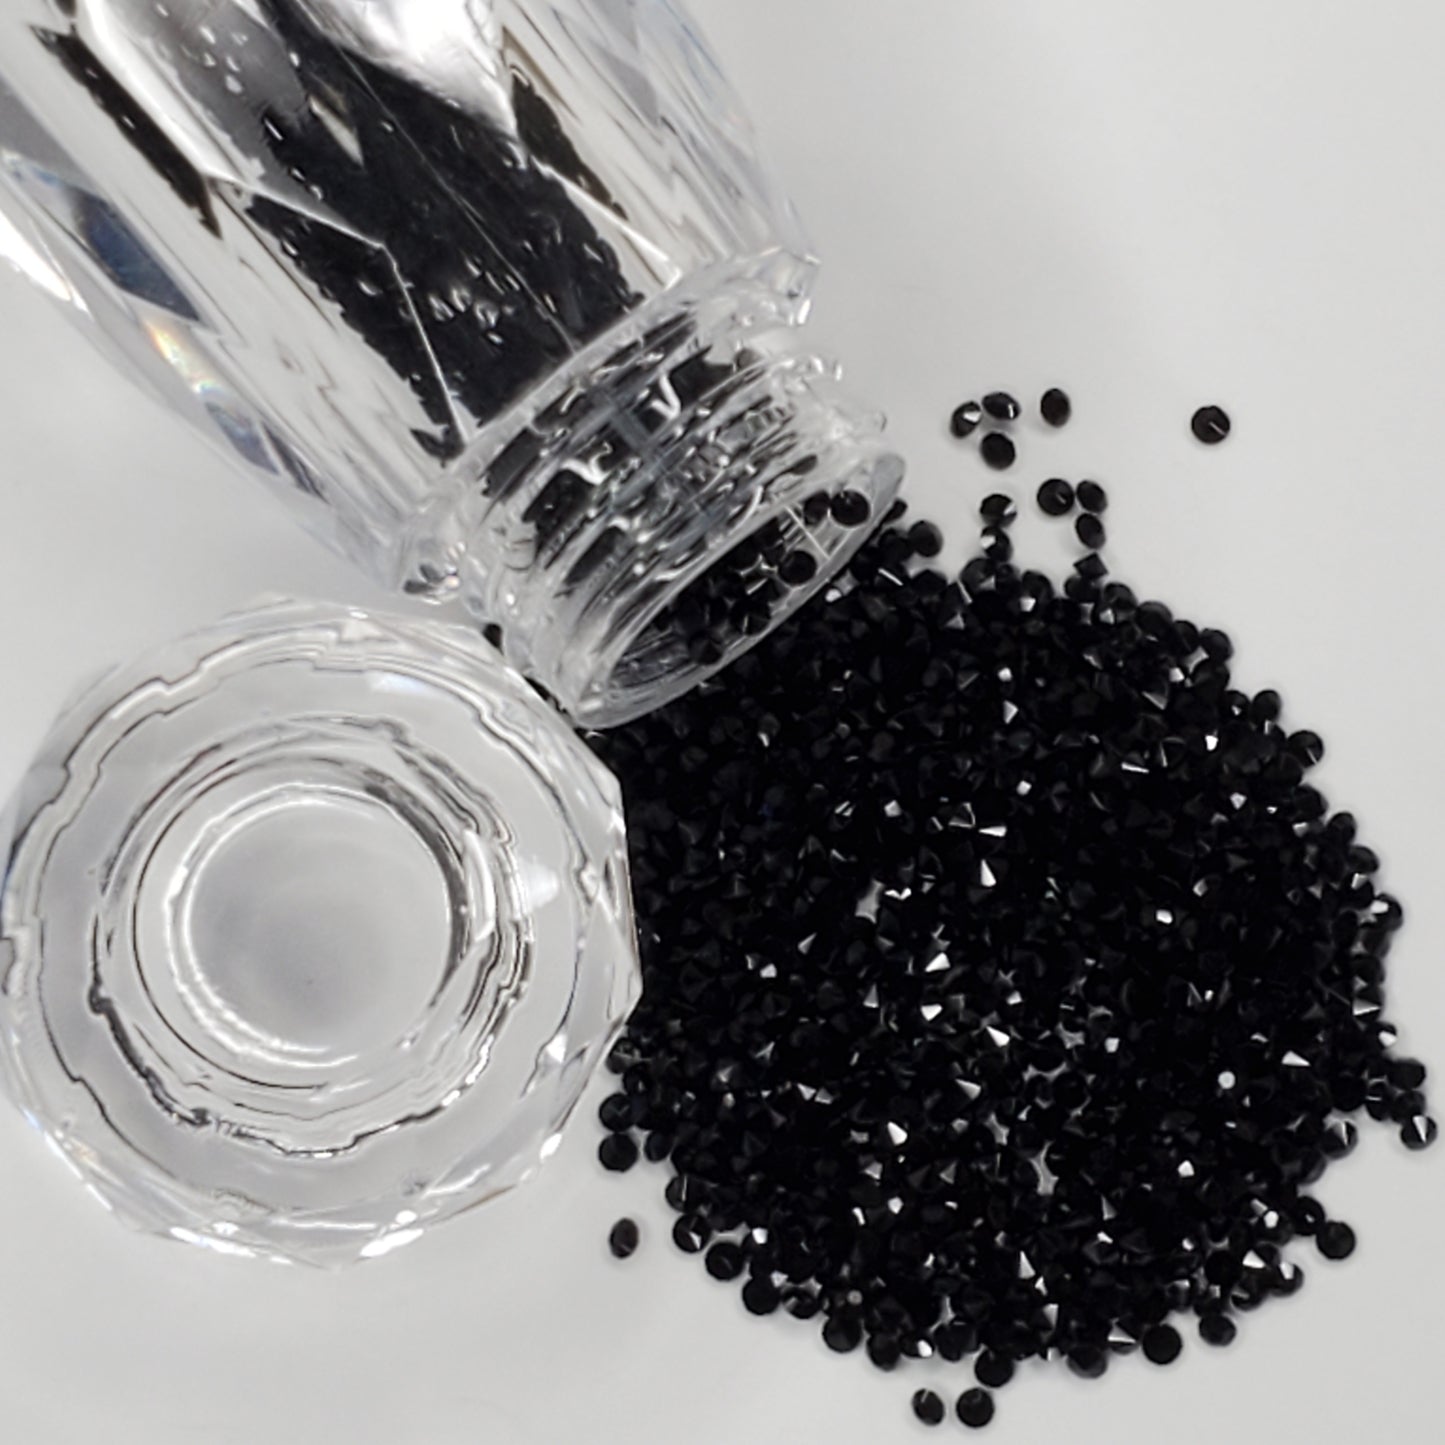 Lt Topaz Caviar/Pixie Dust Micro Mini Glass Rhinestones – Be Createful